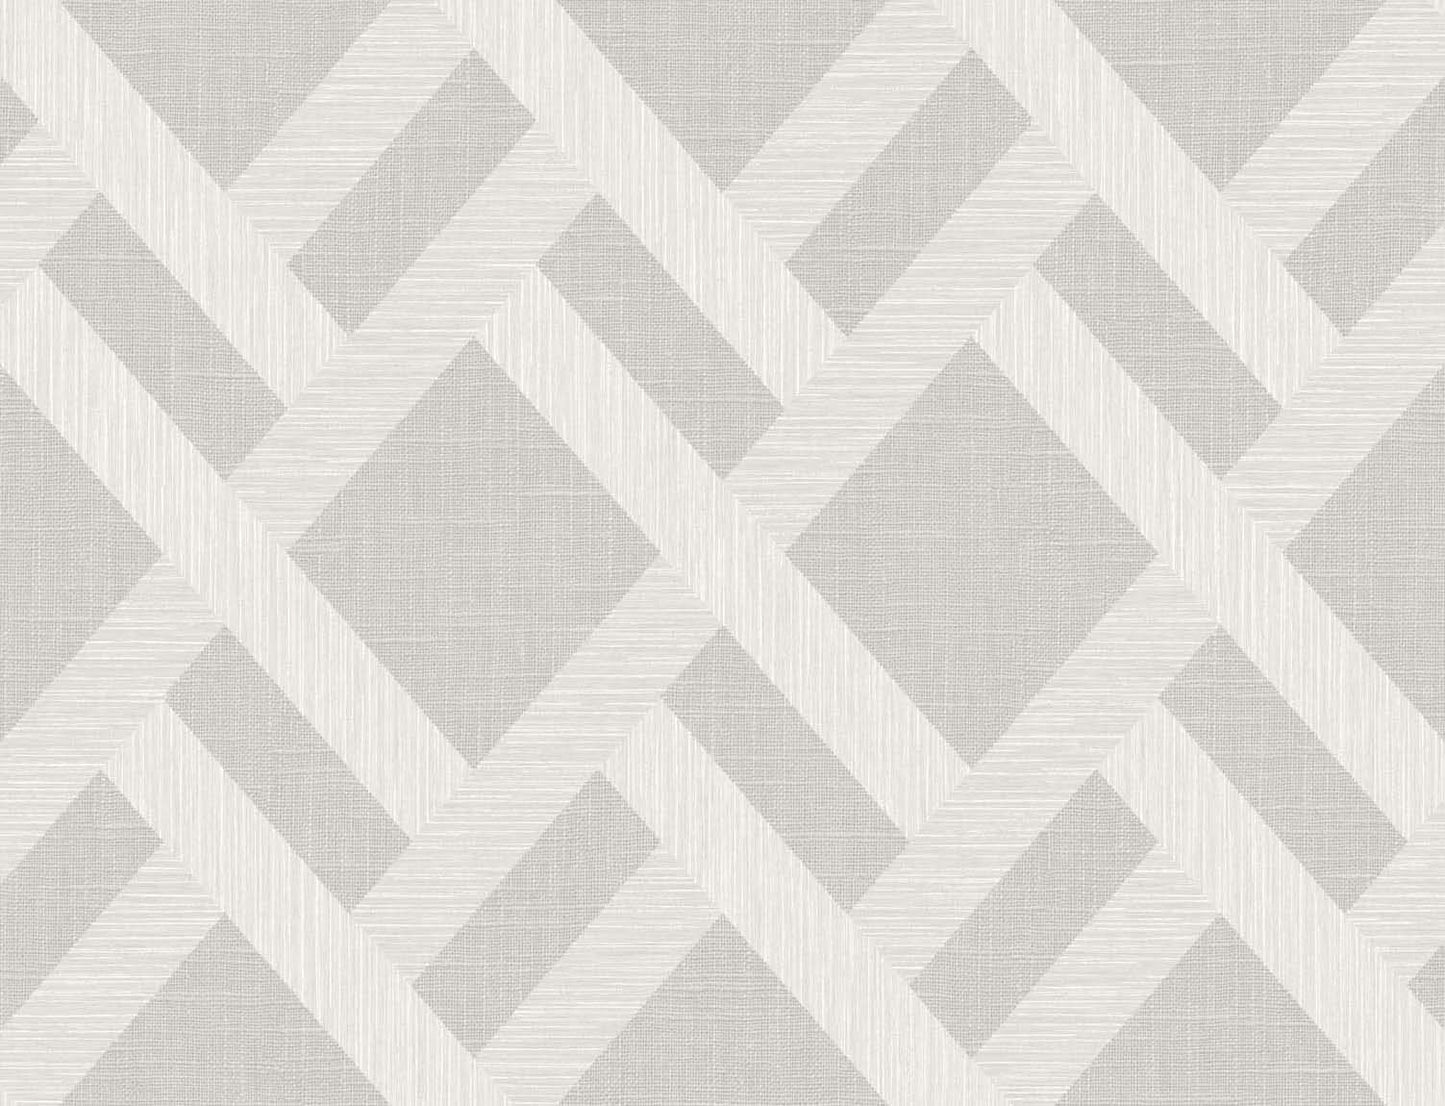 TS80808 | Linen Trellis, Grey - Seabrook Designs Wallpaper